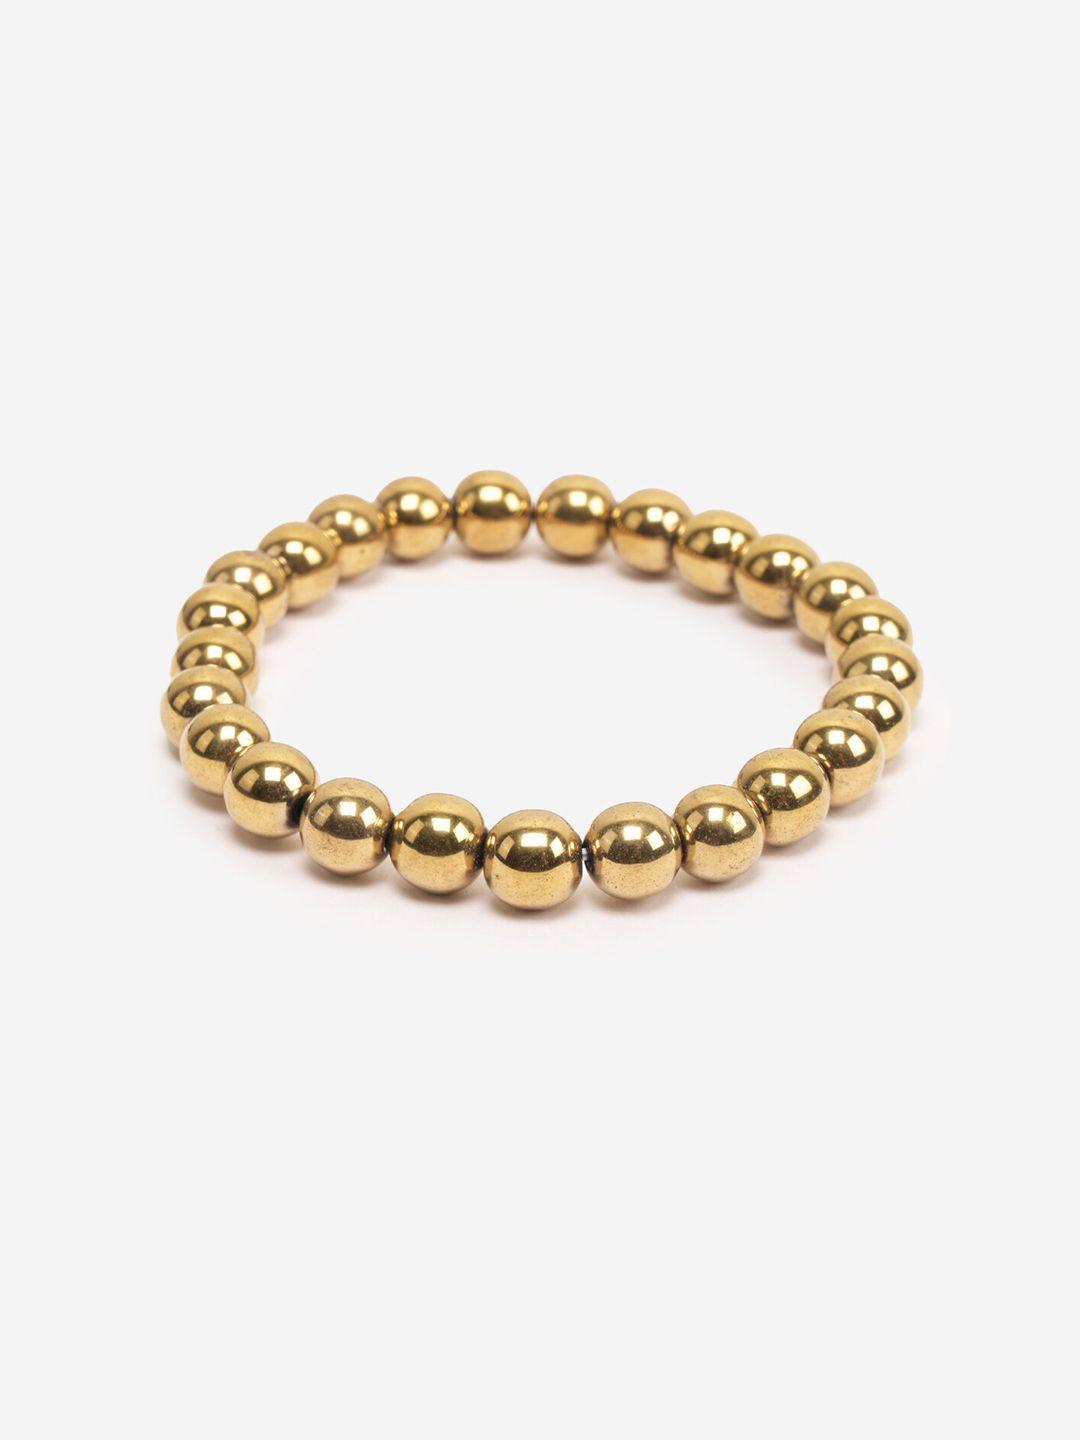 buckleup unisex bead bracelet